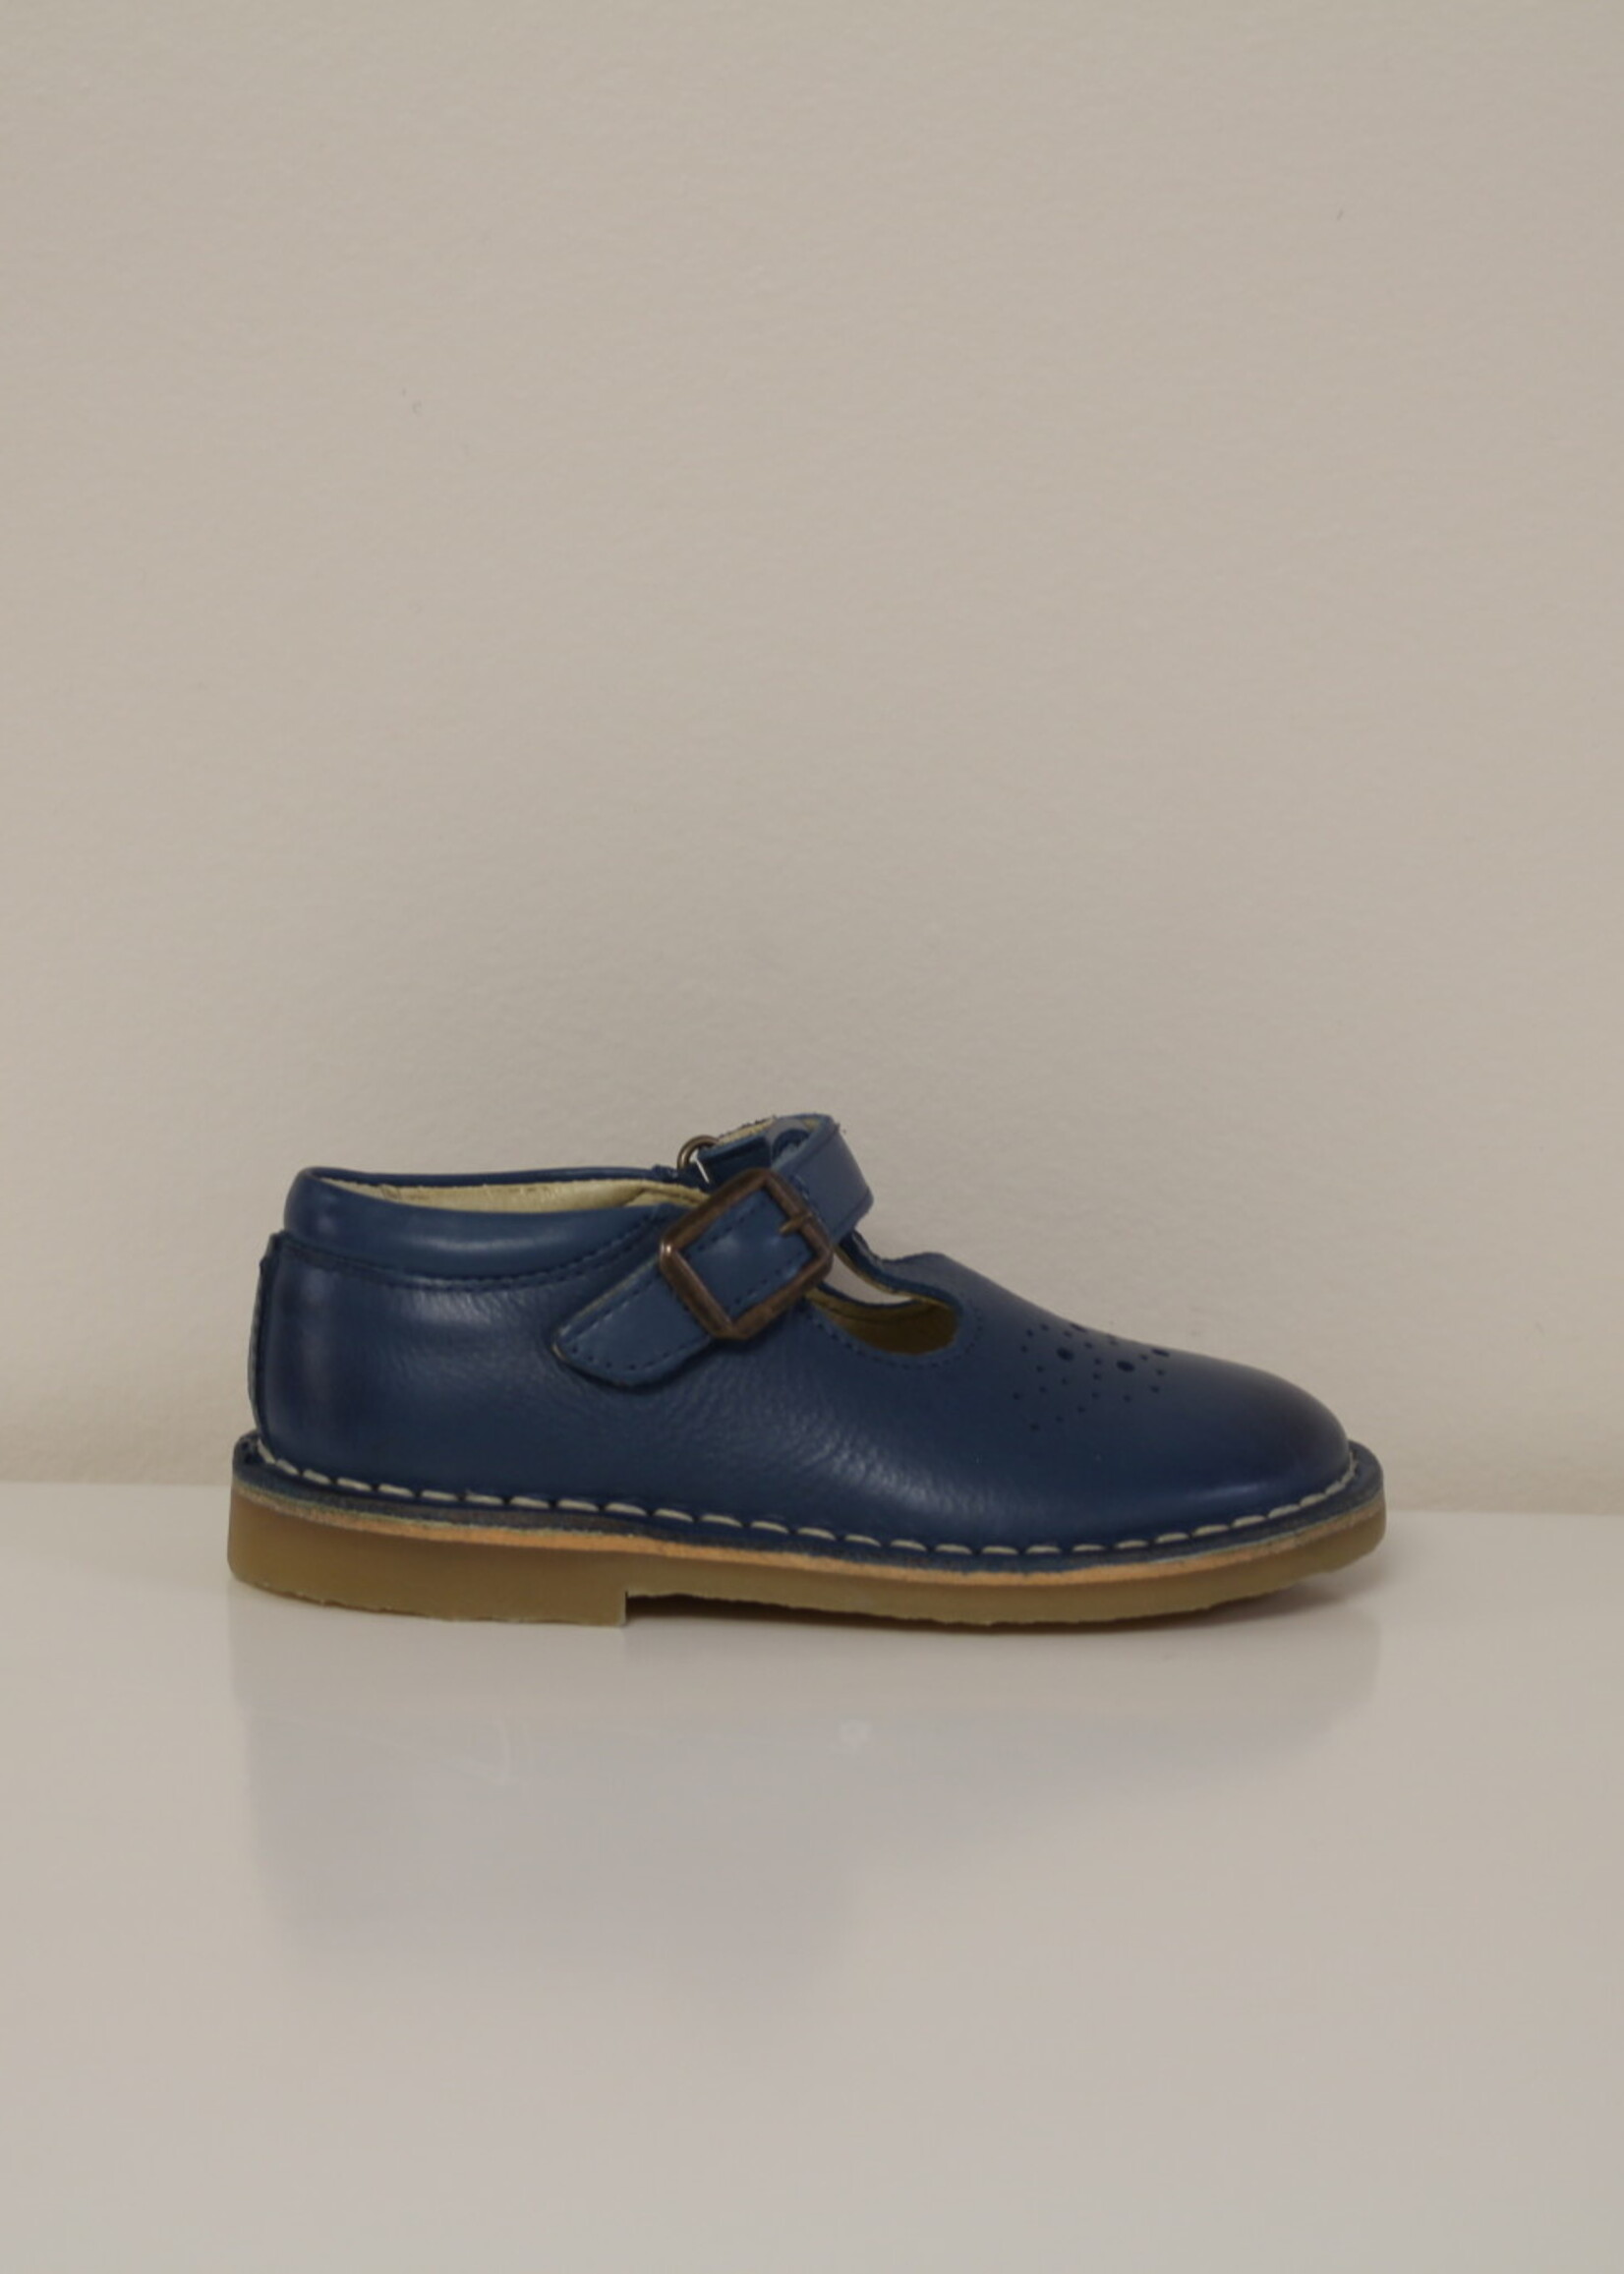 t-bar shoe rubber sole ocean blue